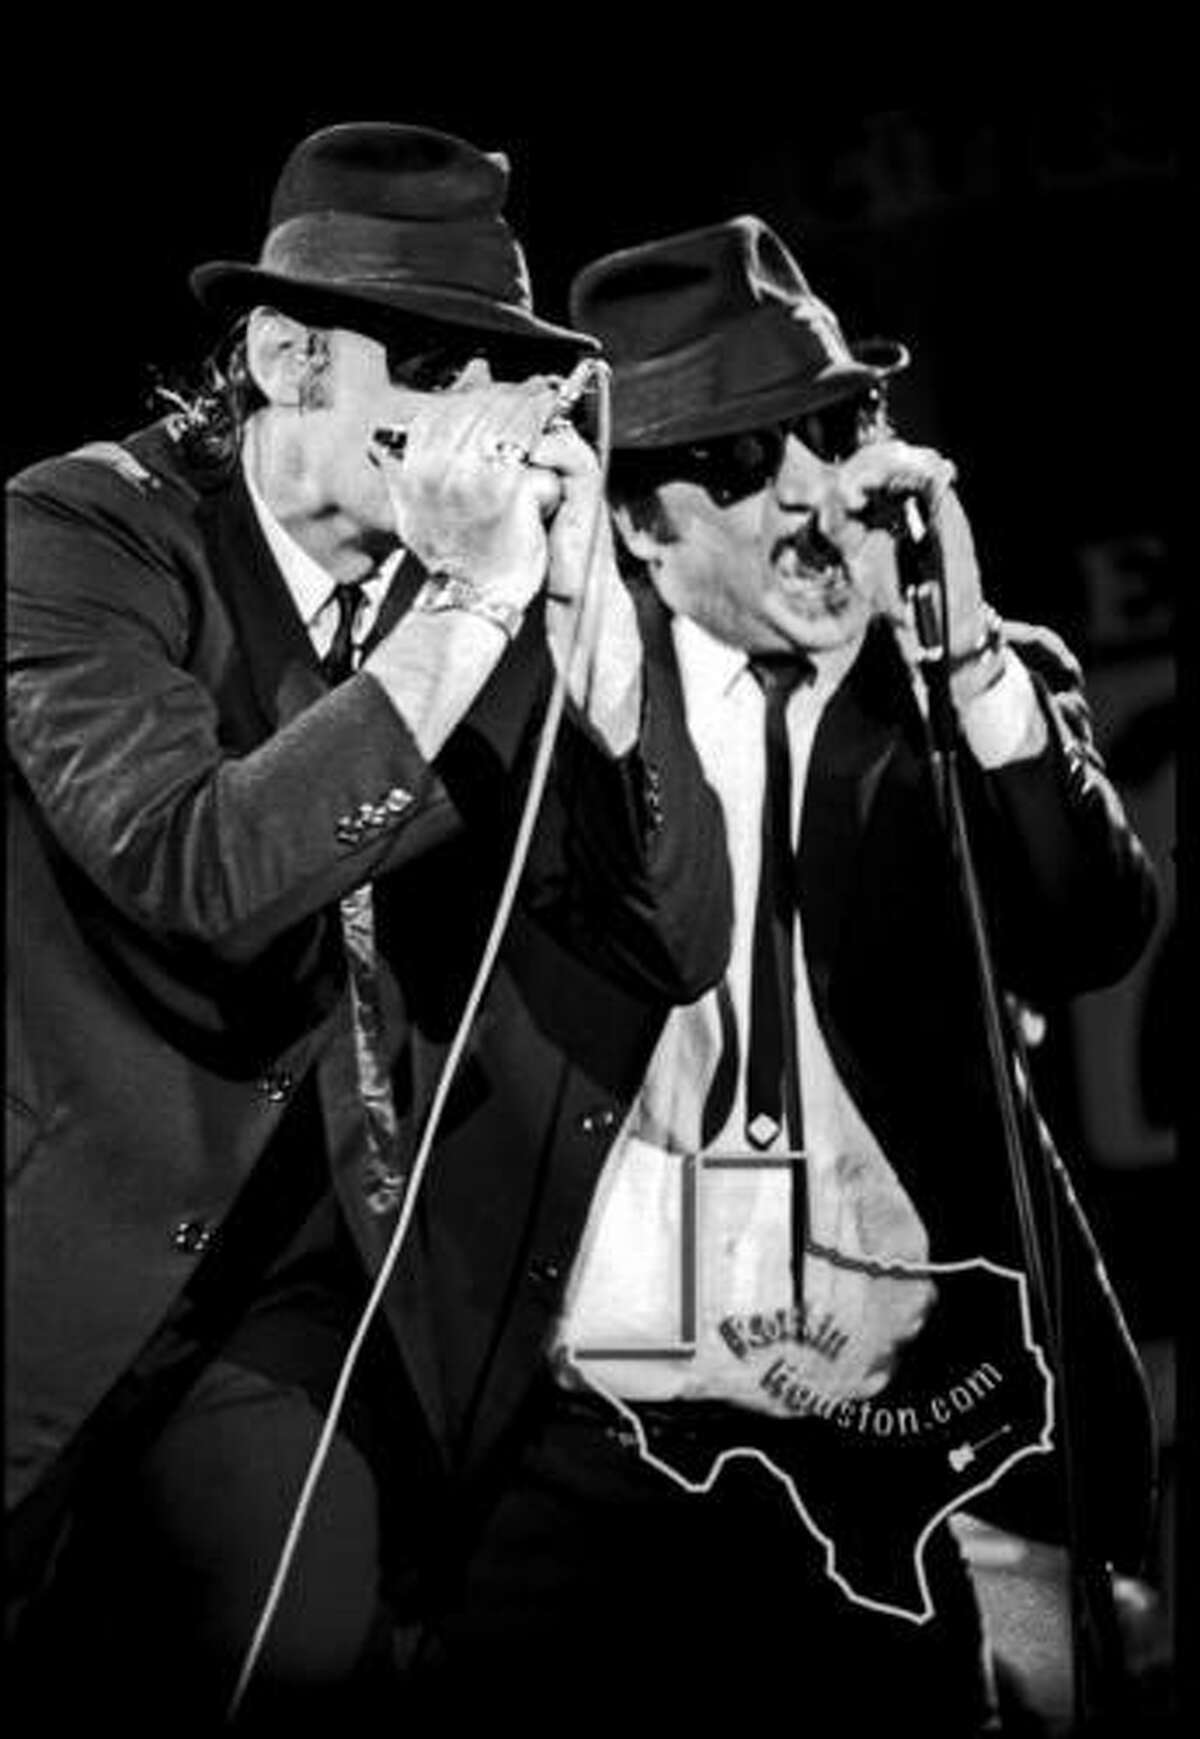 Dan Aykroyd and John Belushi as the Blues Brothers, July 12, 1980 at Hofheinz Pavilion.